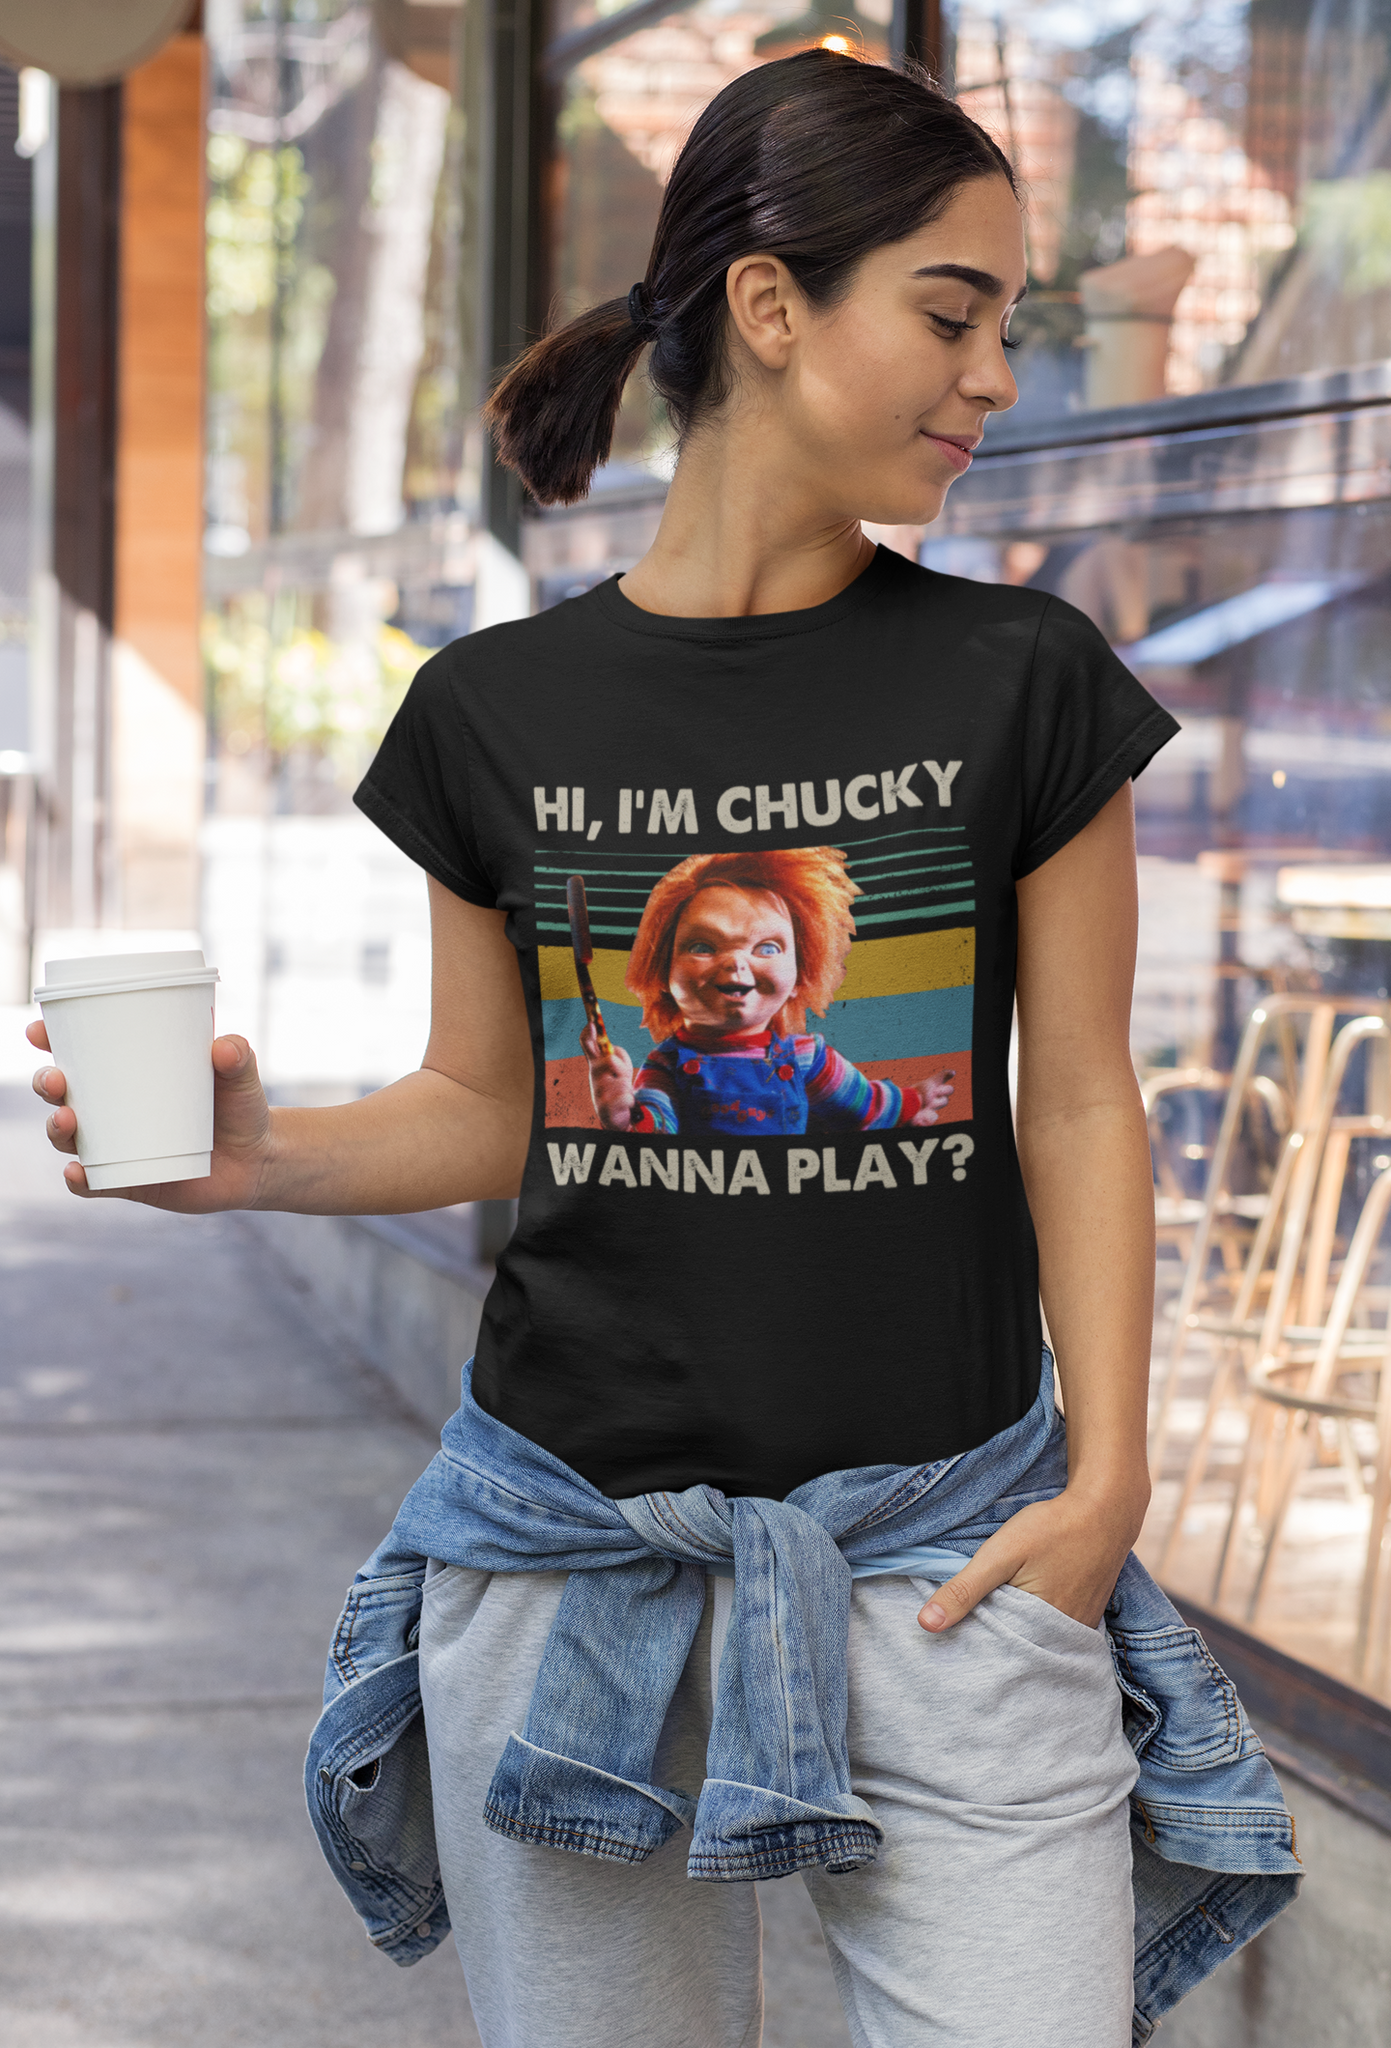 Chucky Vintage T Shirt, Hi Im Chucky Wanna Play T Shirt, Horror Character Shirt, Halloween Gifts